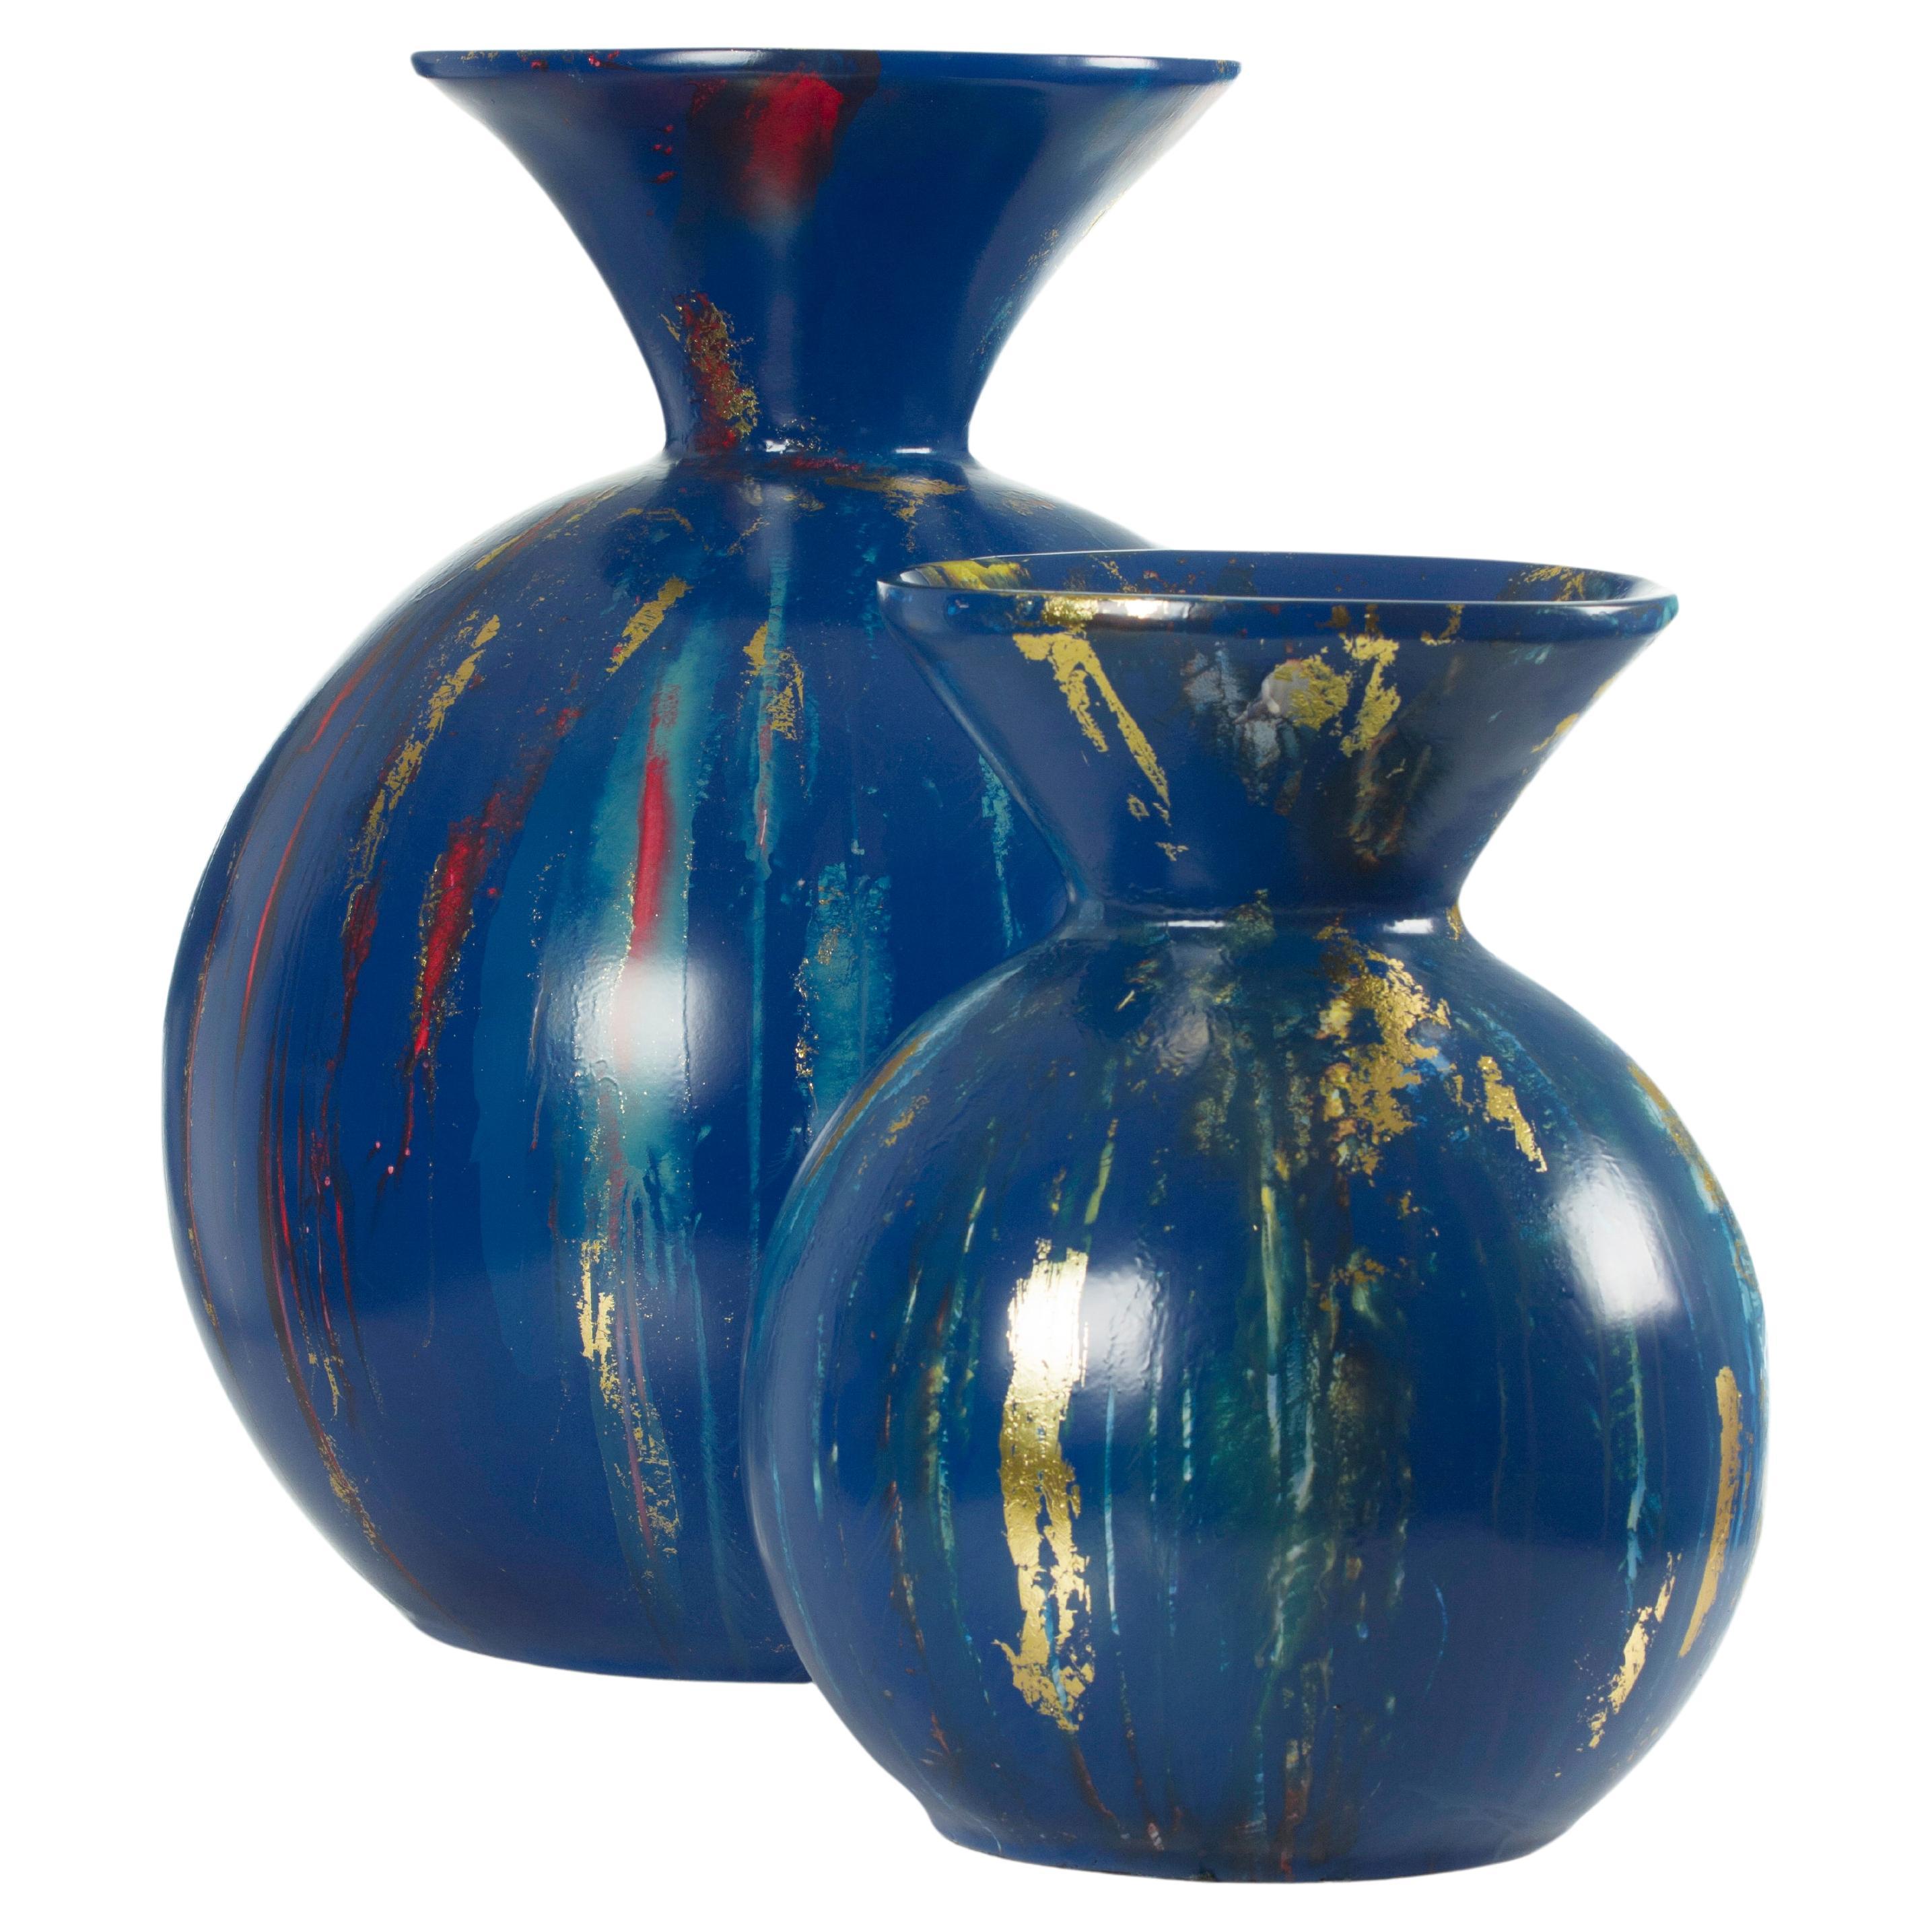 Set/2 Vases Navy Blue, Gold Leaf Handmade in Portugal by Lusitanus Home